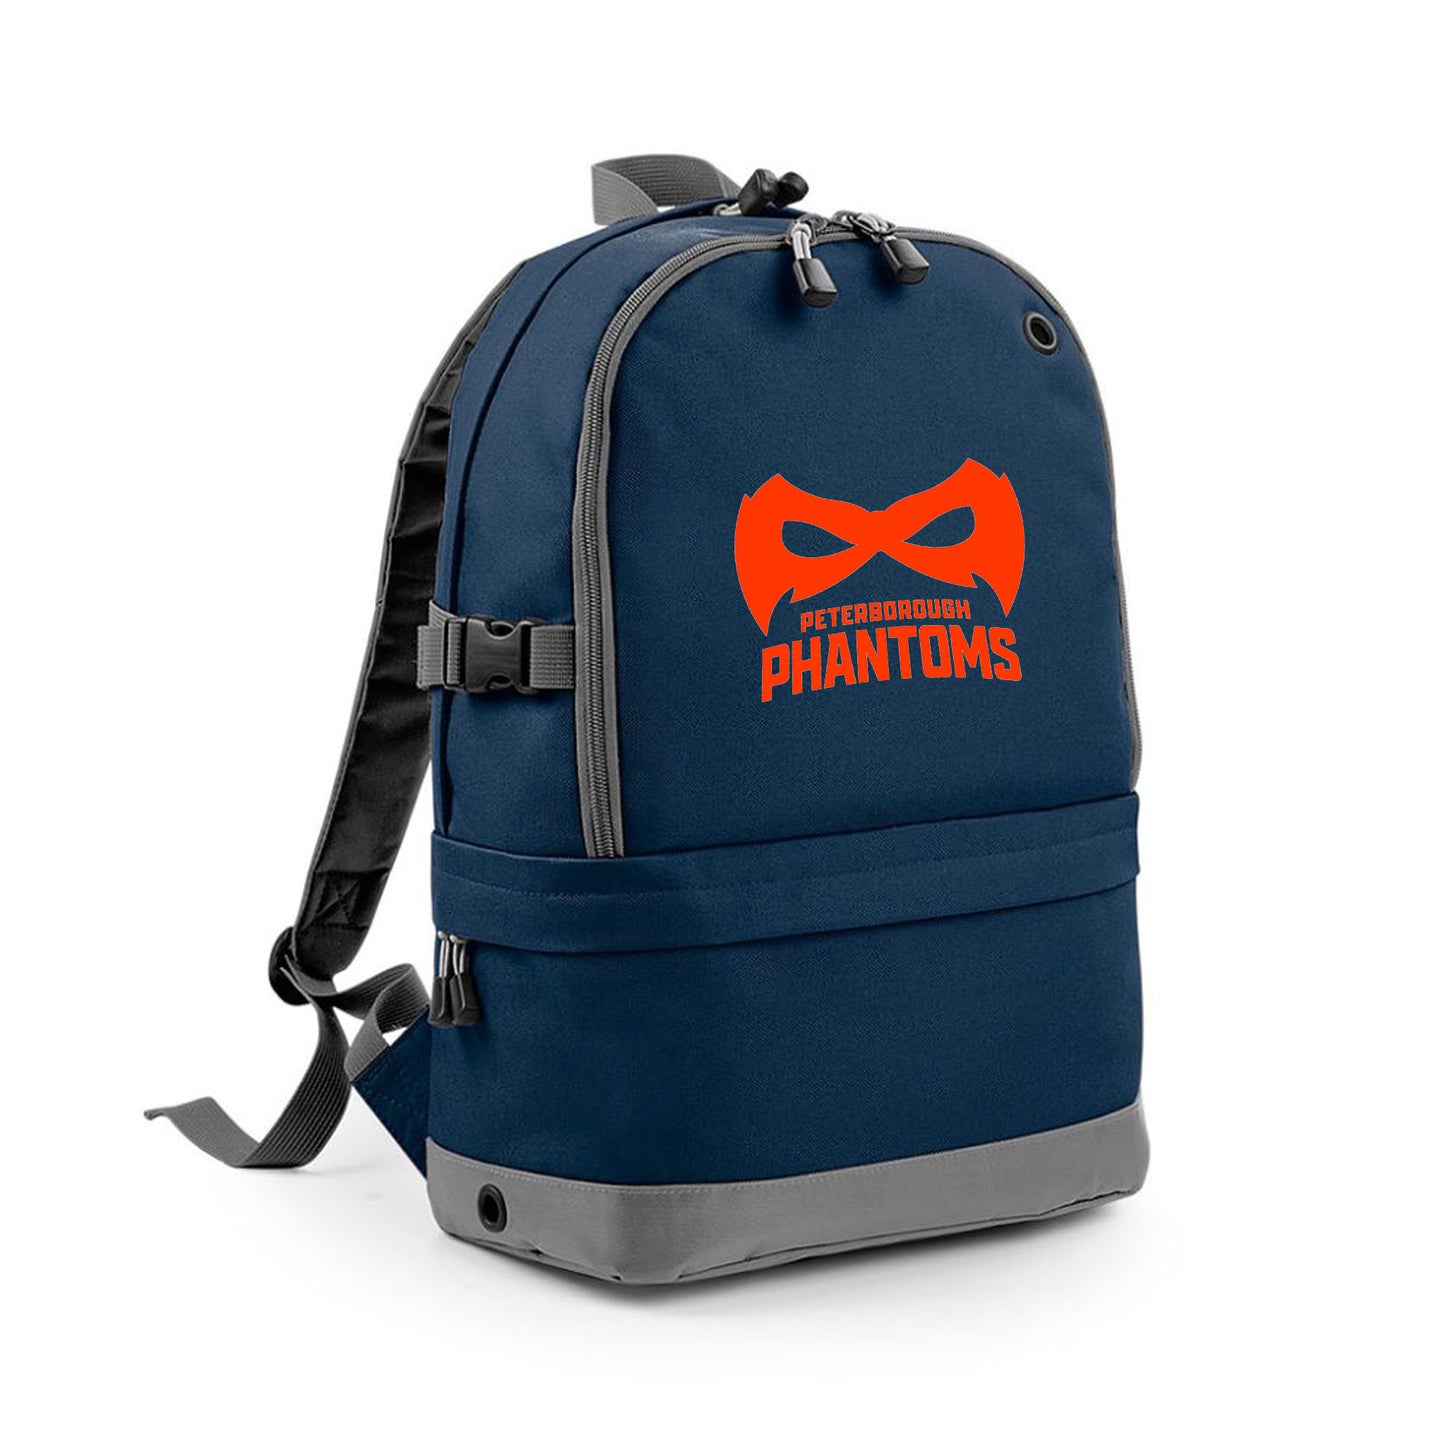 Phantoms Backpack